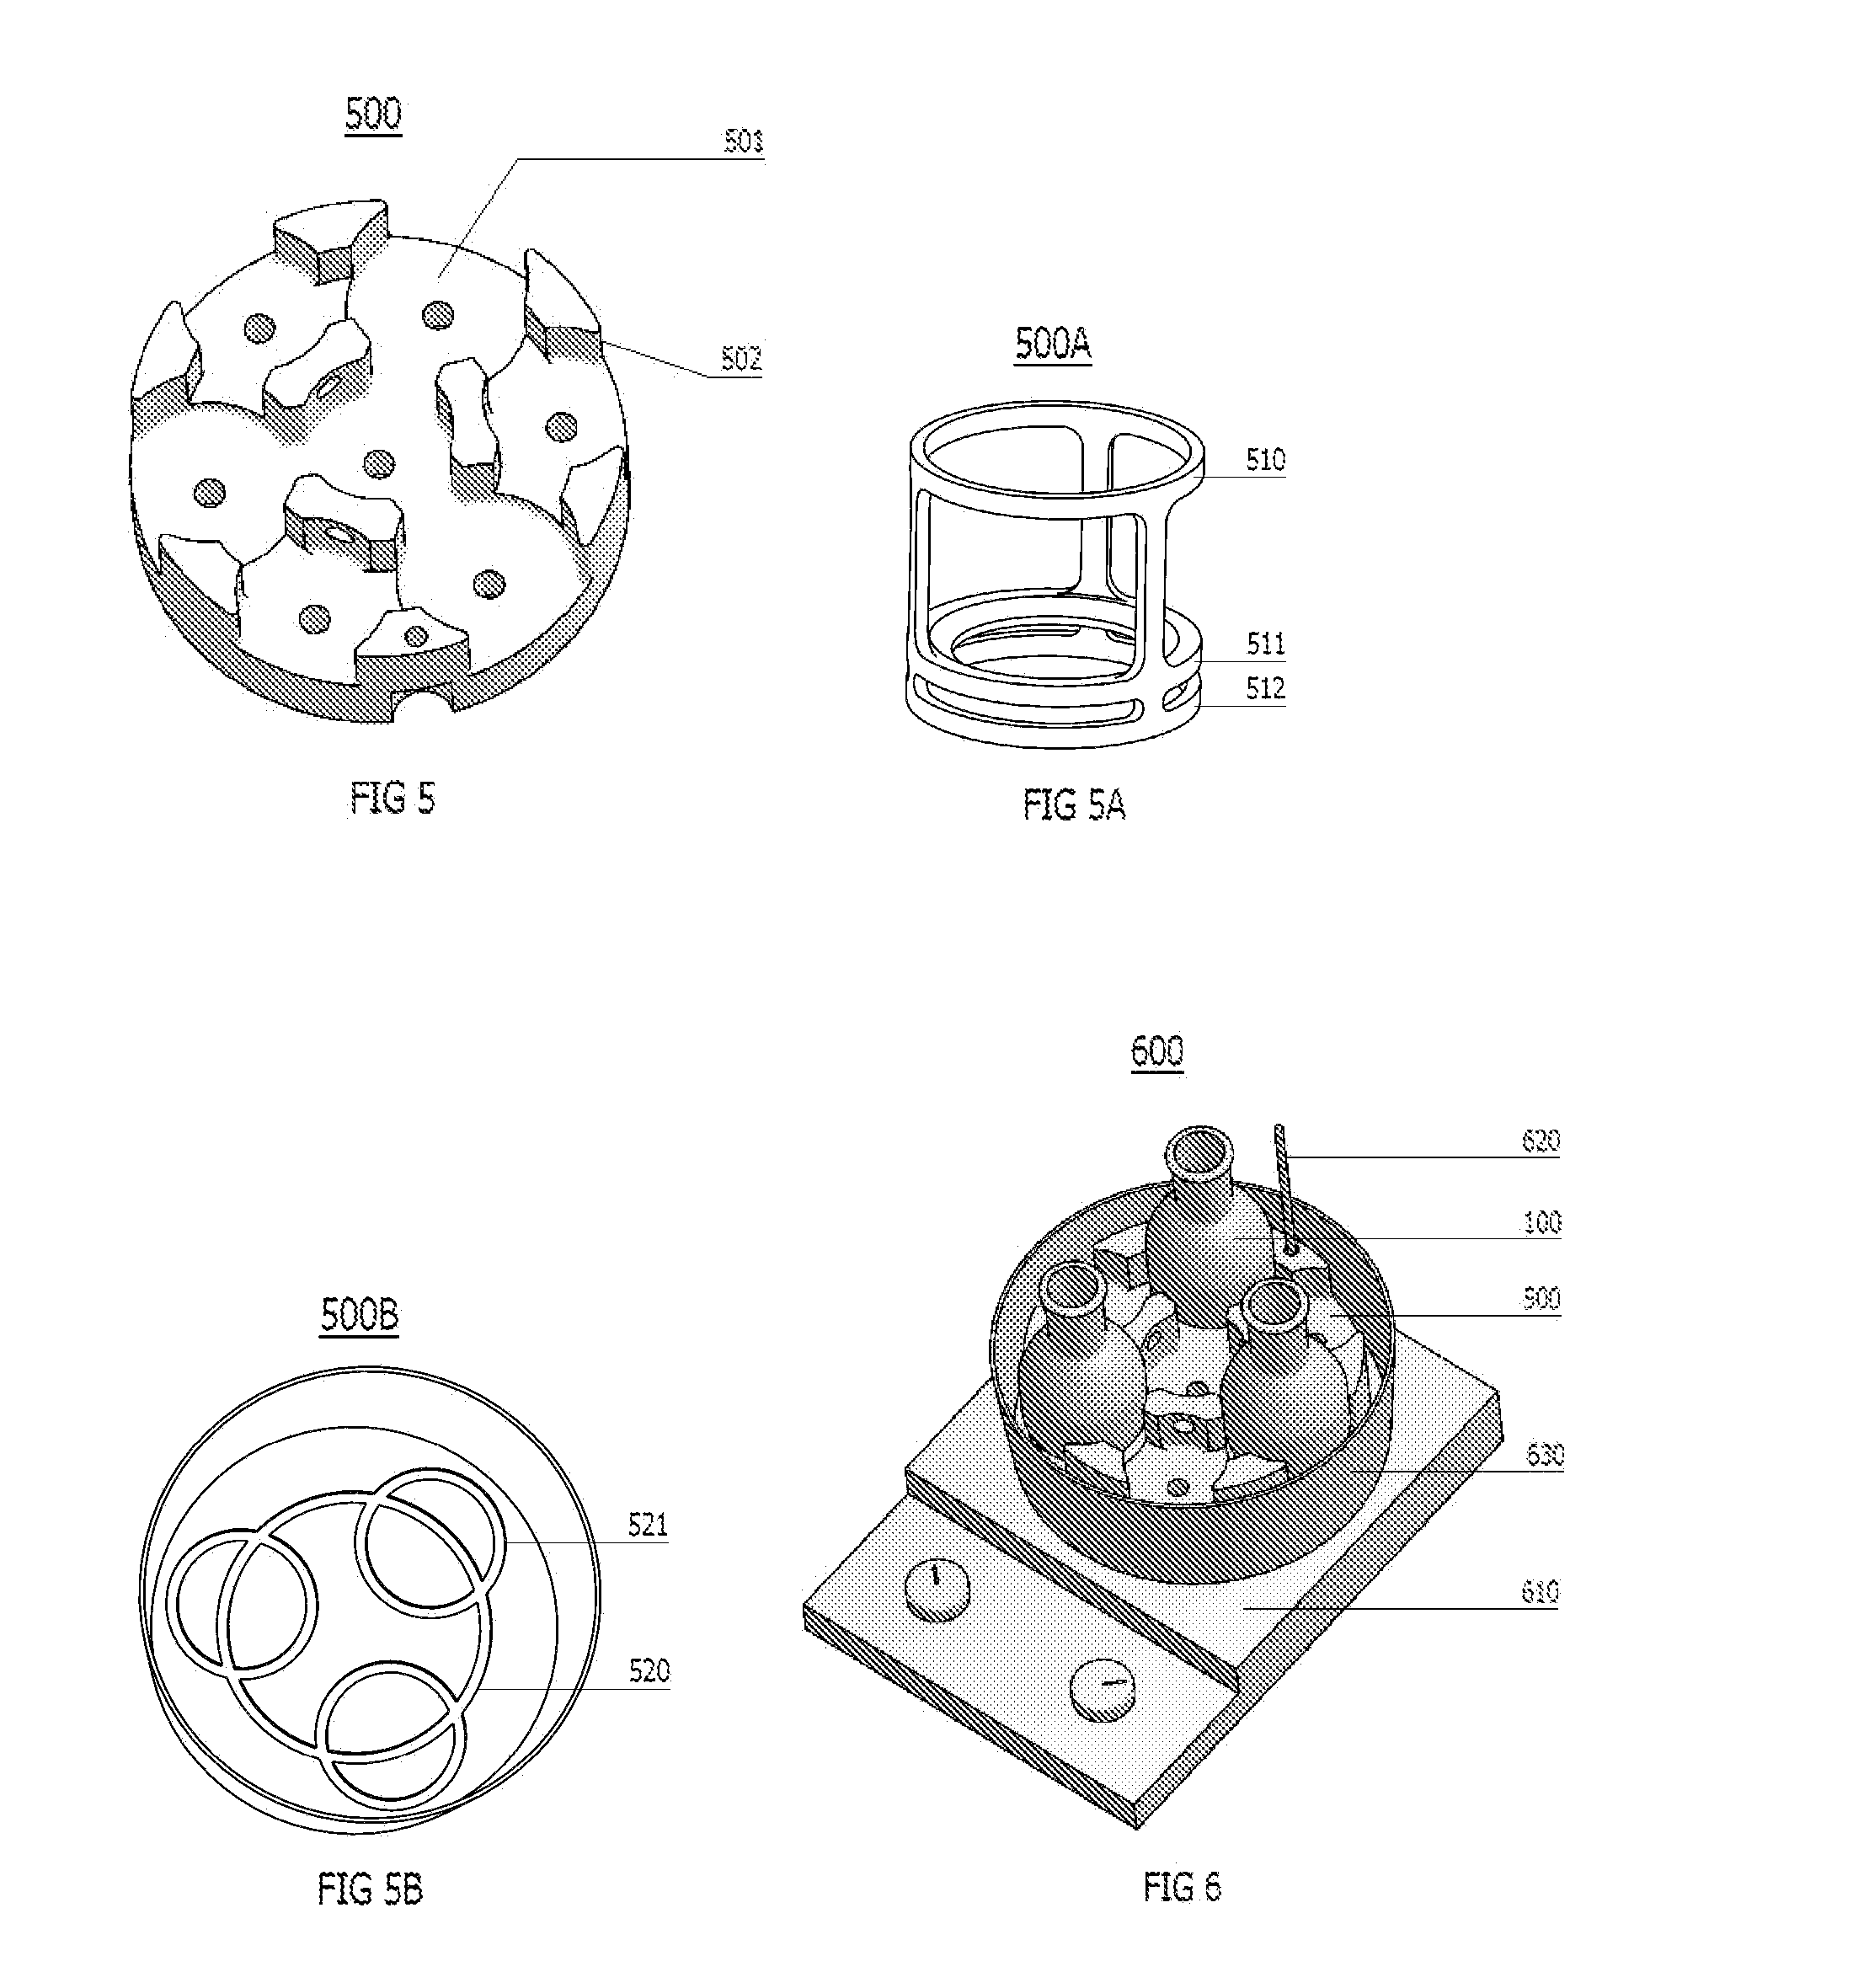 Laboratory flasks and flask kits